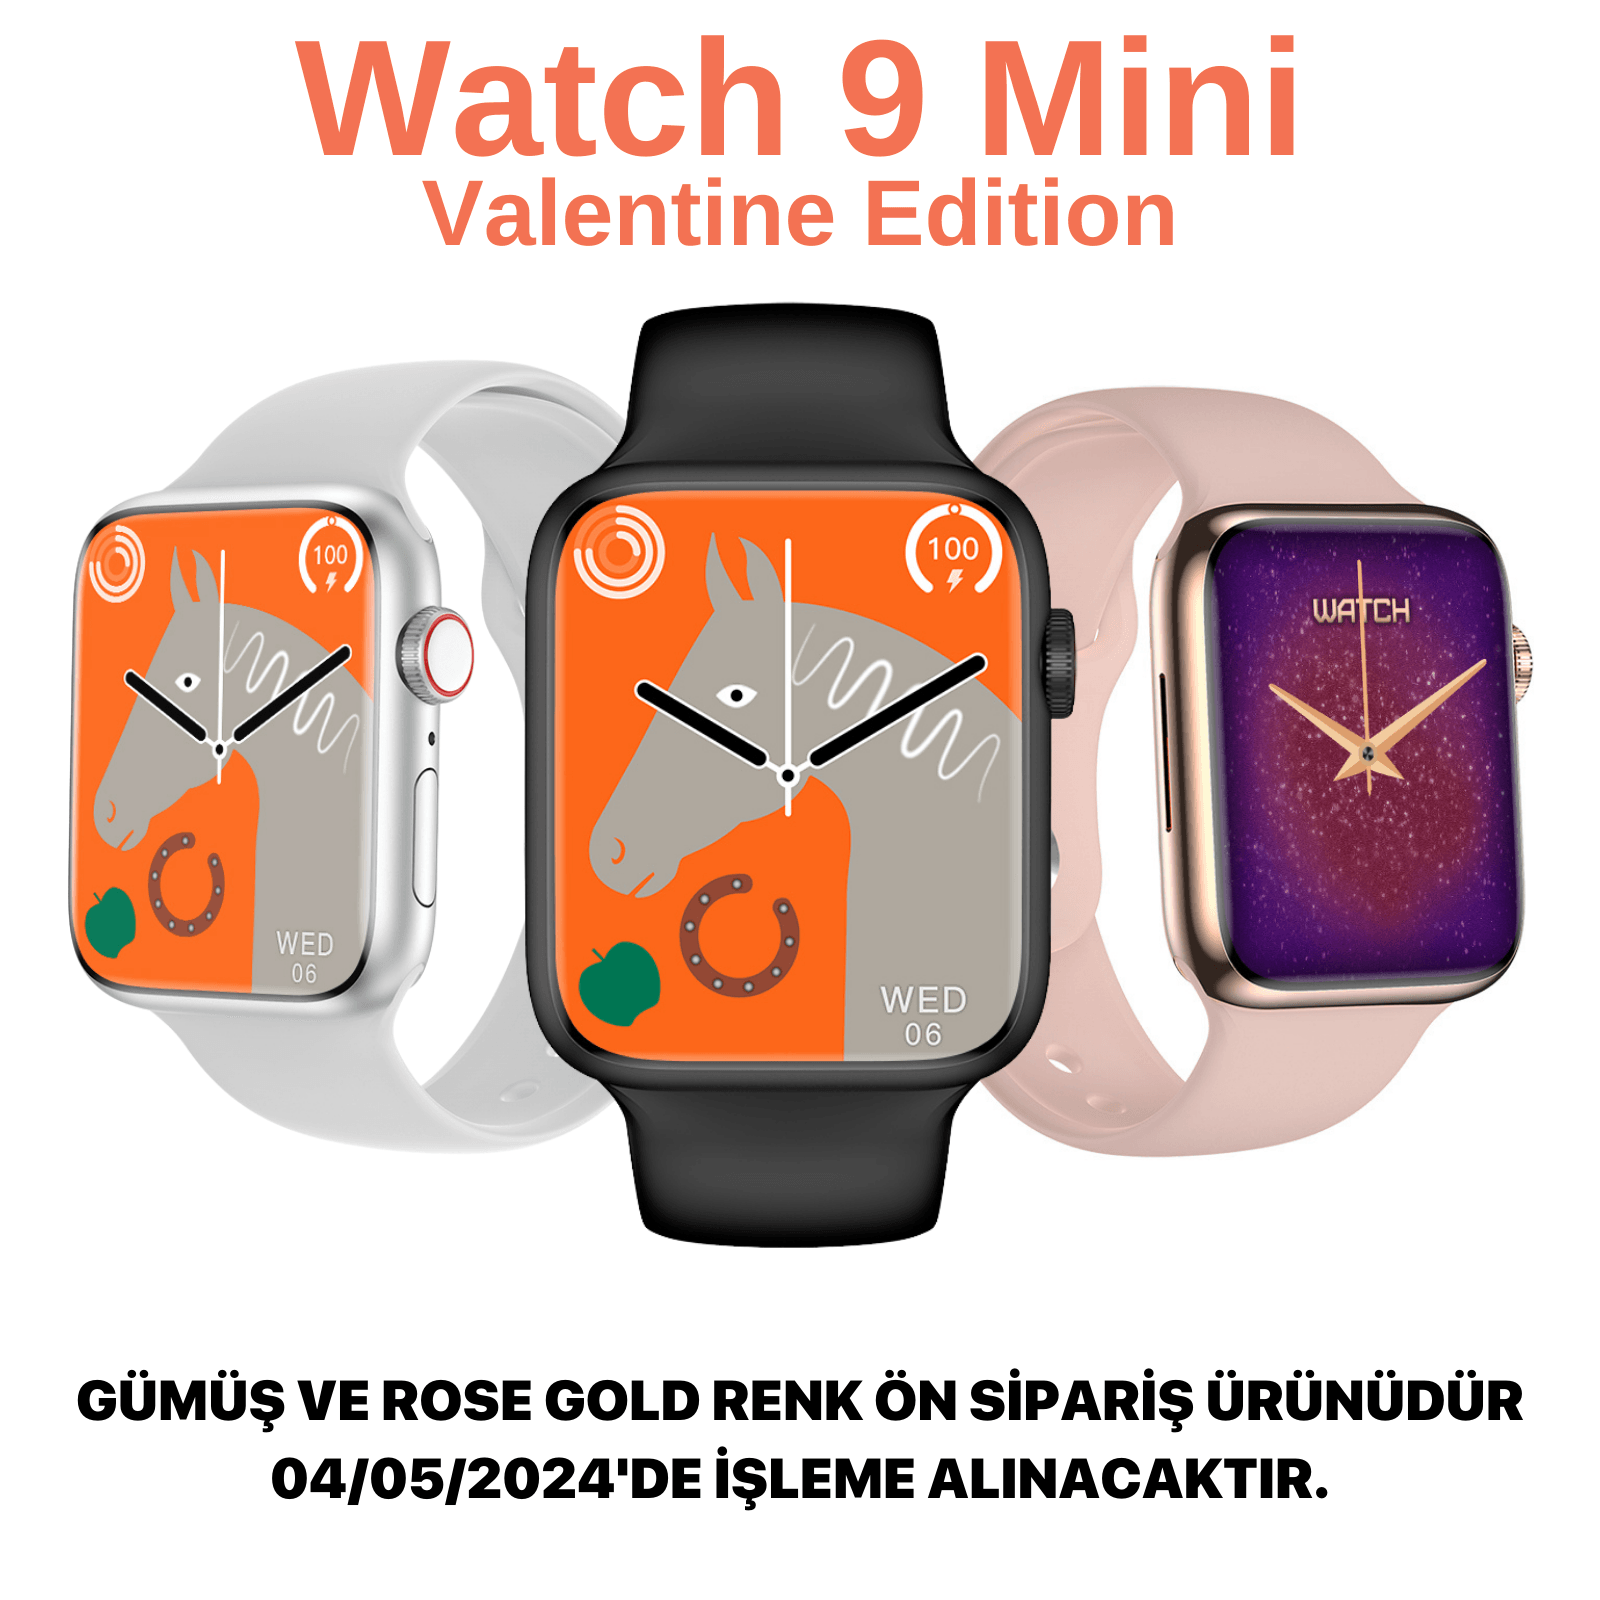 Watch 9 Mini Akıllı Saat (Valentine Edition) 